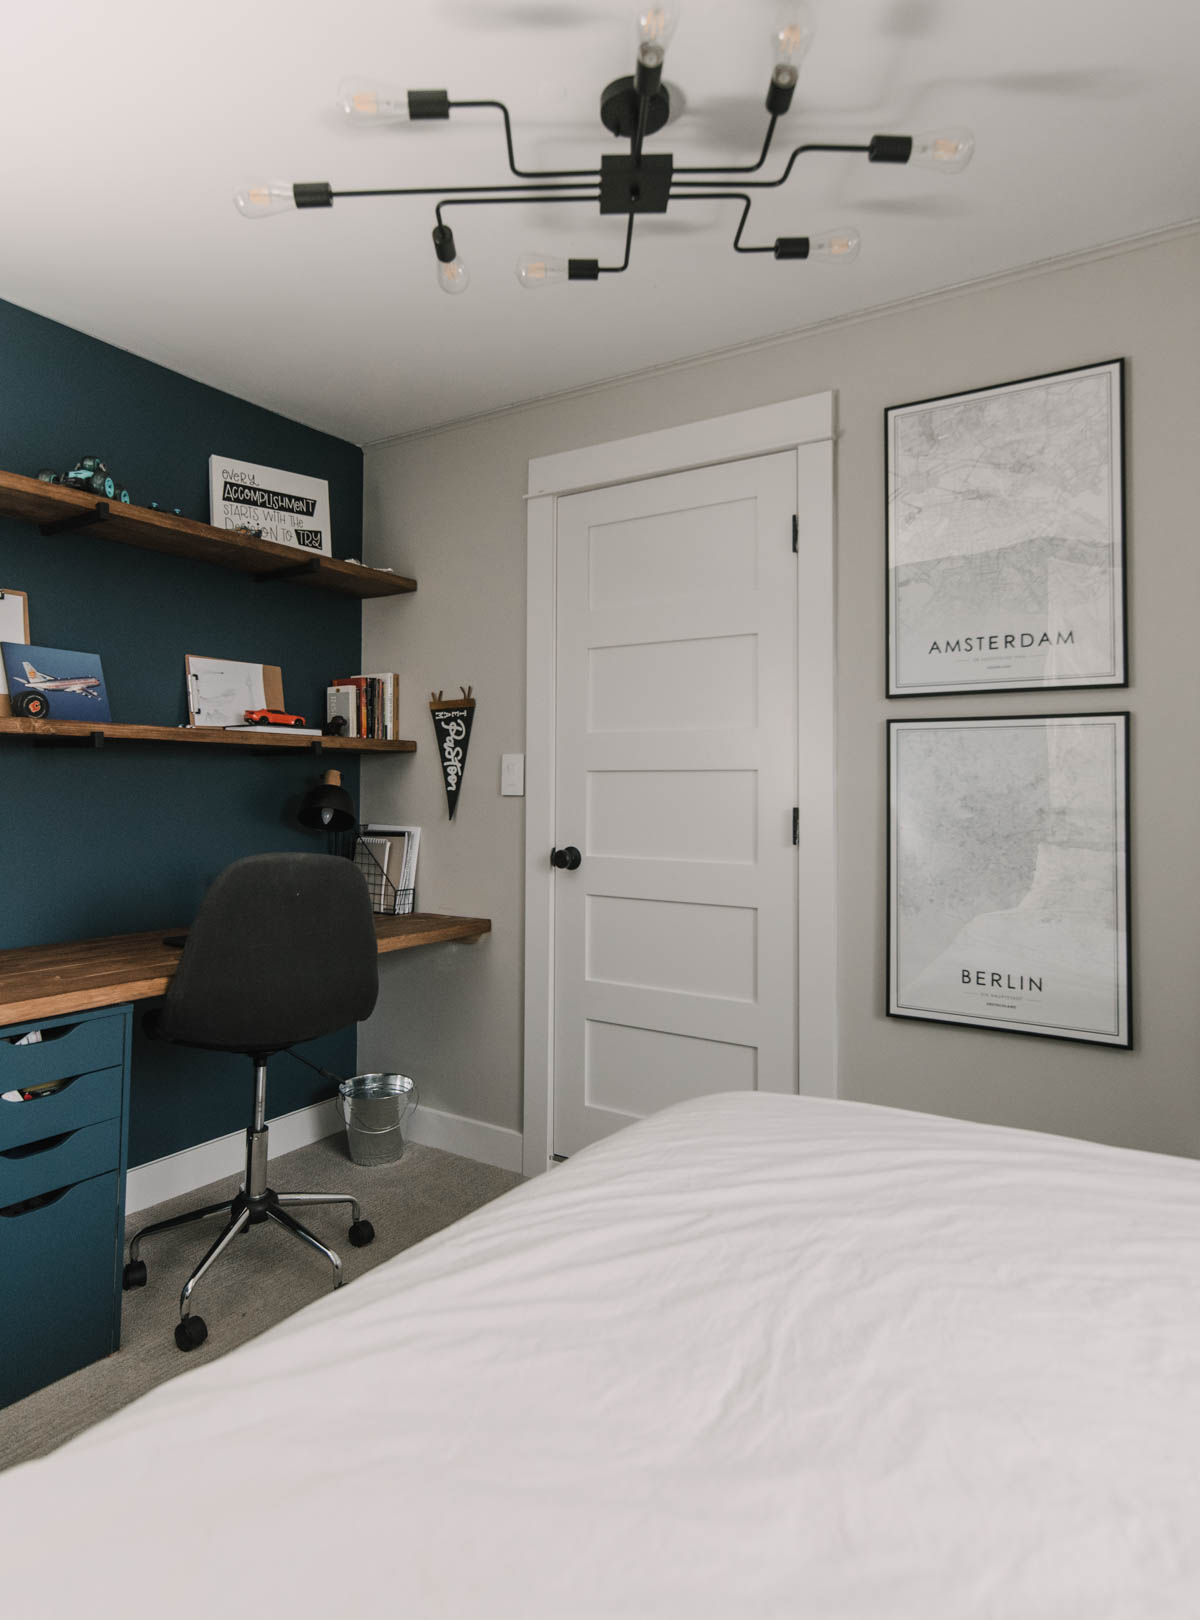 DIY Tween Bedroom makeover with modern built in desk and shelving